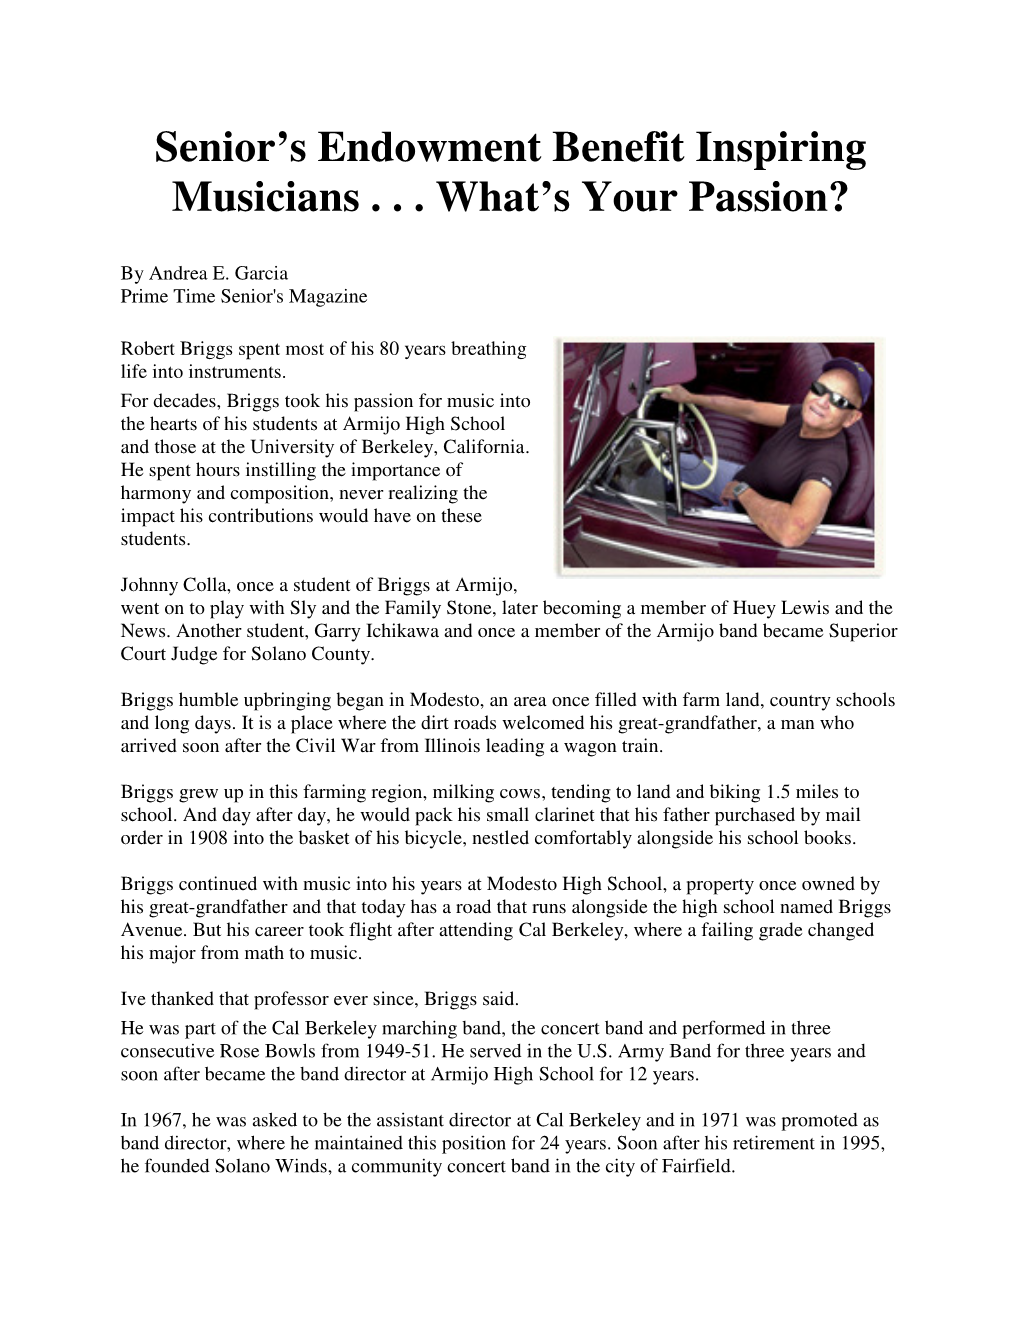 Senior's Endowment Benefit Inspiring Musicians . . . What's Your Passion?